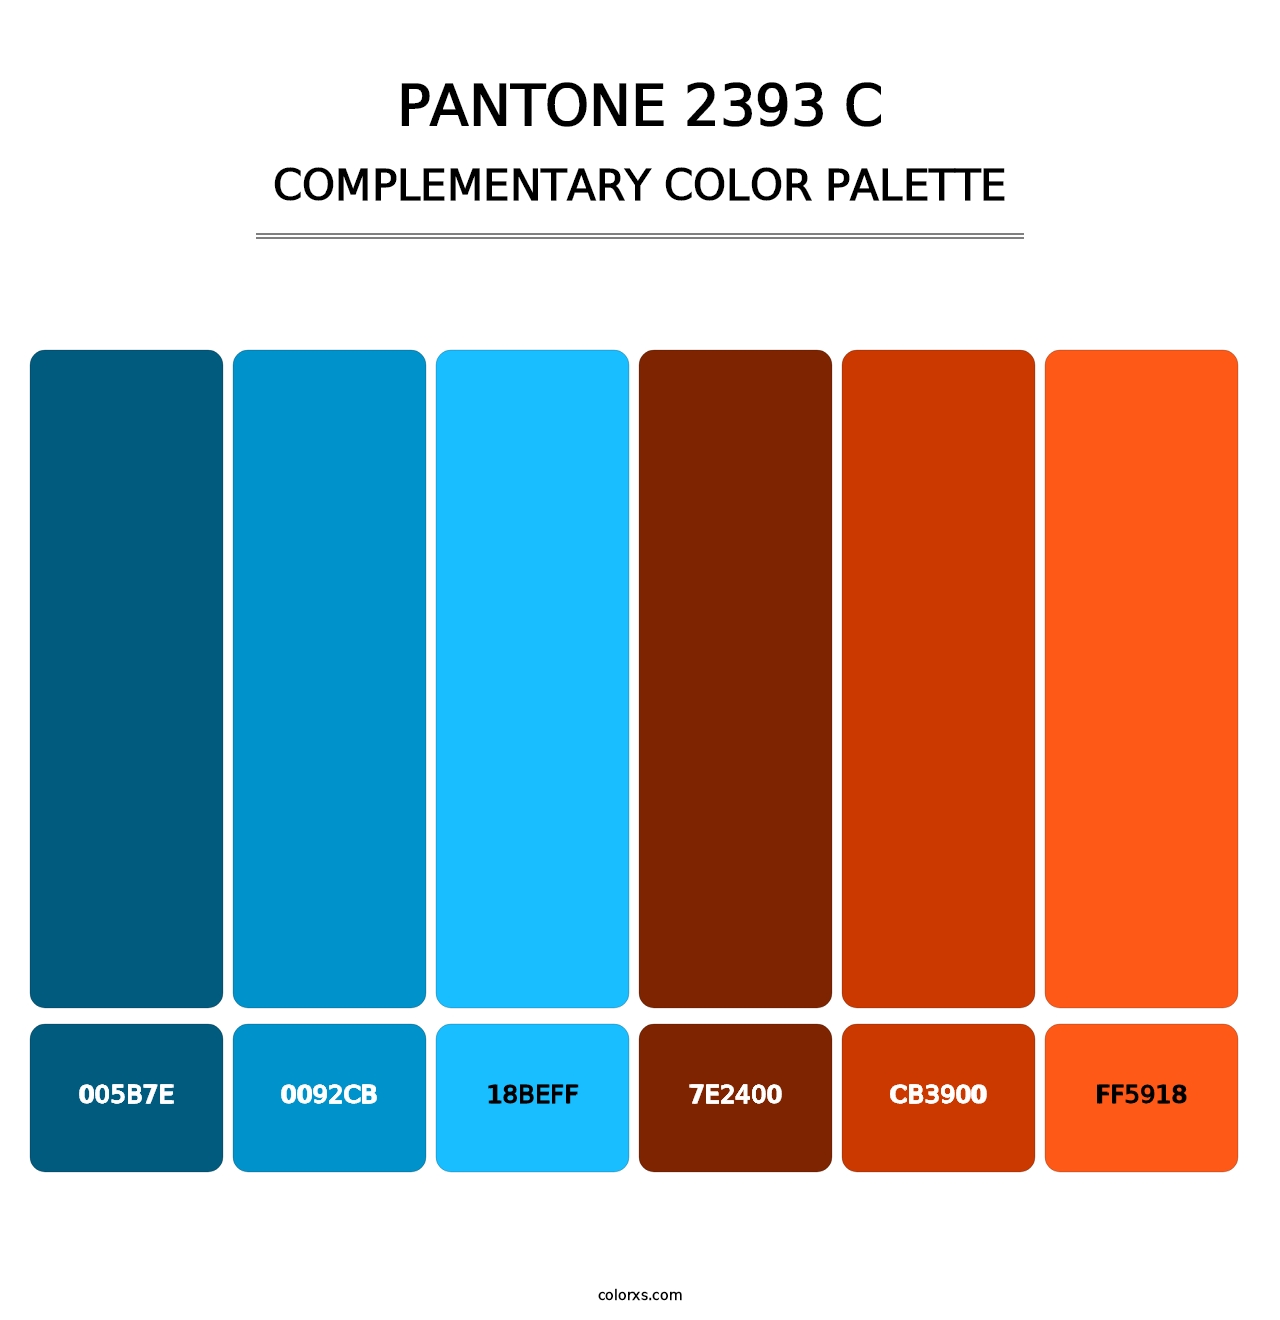 PANTONE 2393 C - Complementary Color Palette